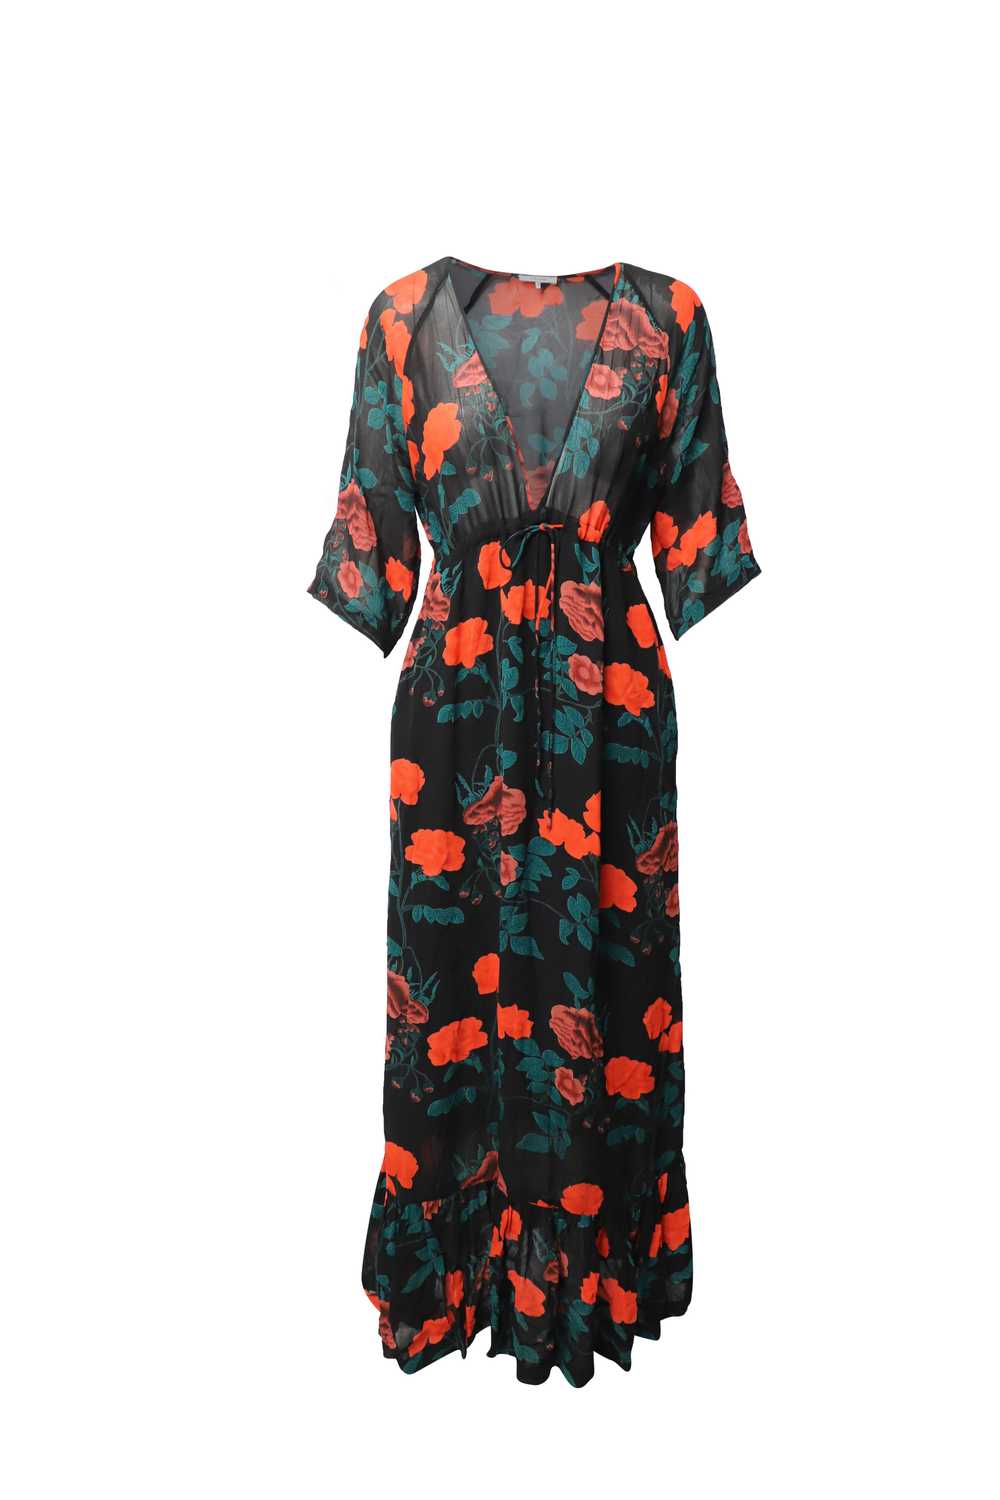 Ganni Black floral print georgette Newman dress - image 7